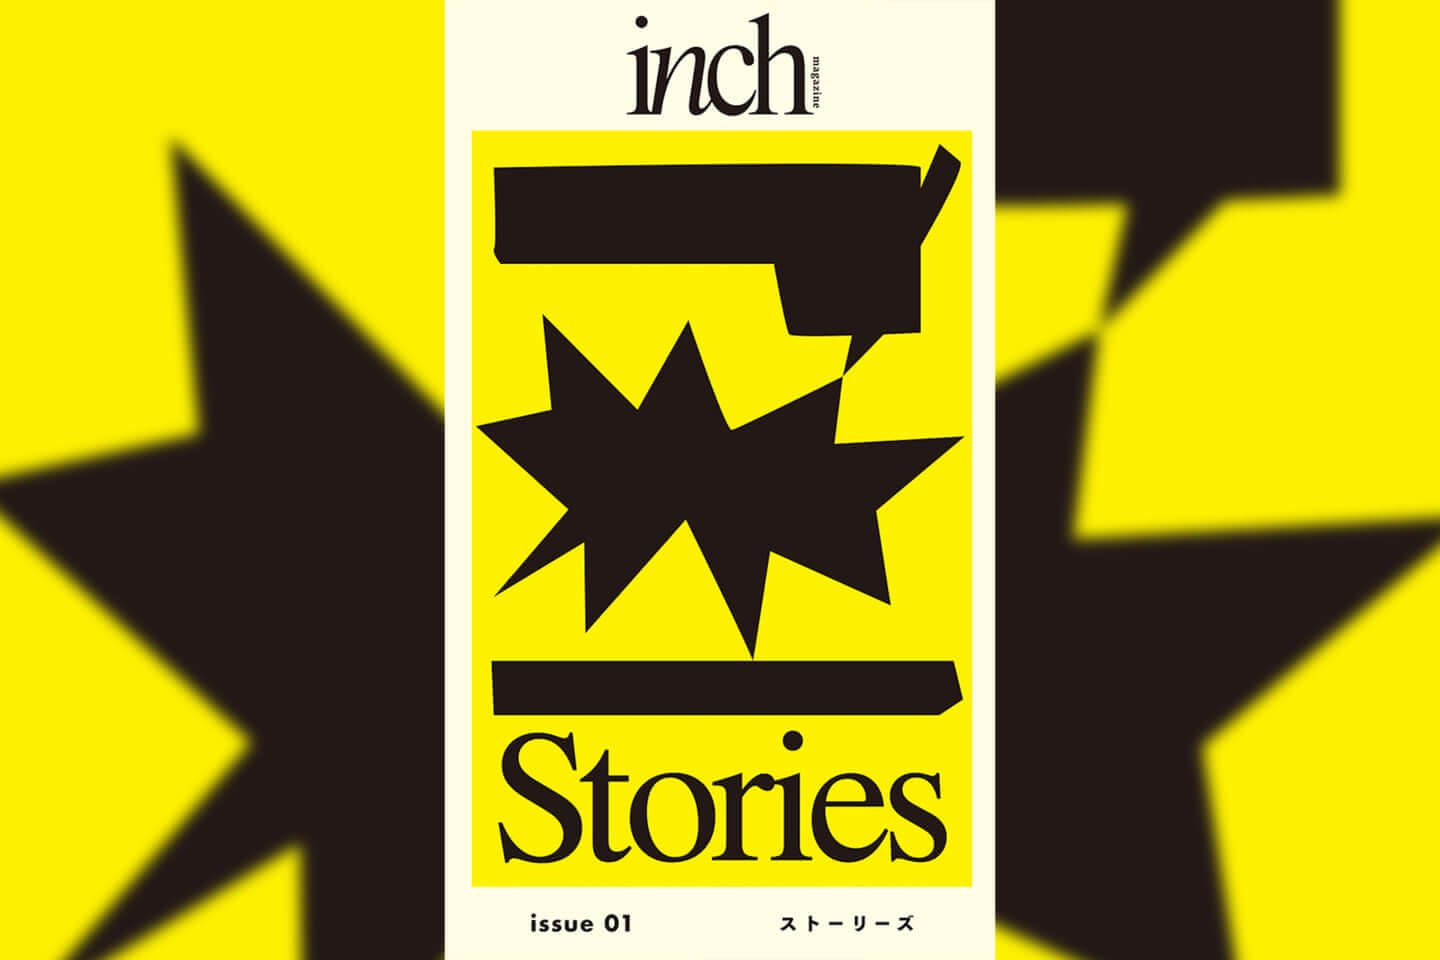 Inch magazine